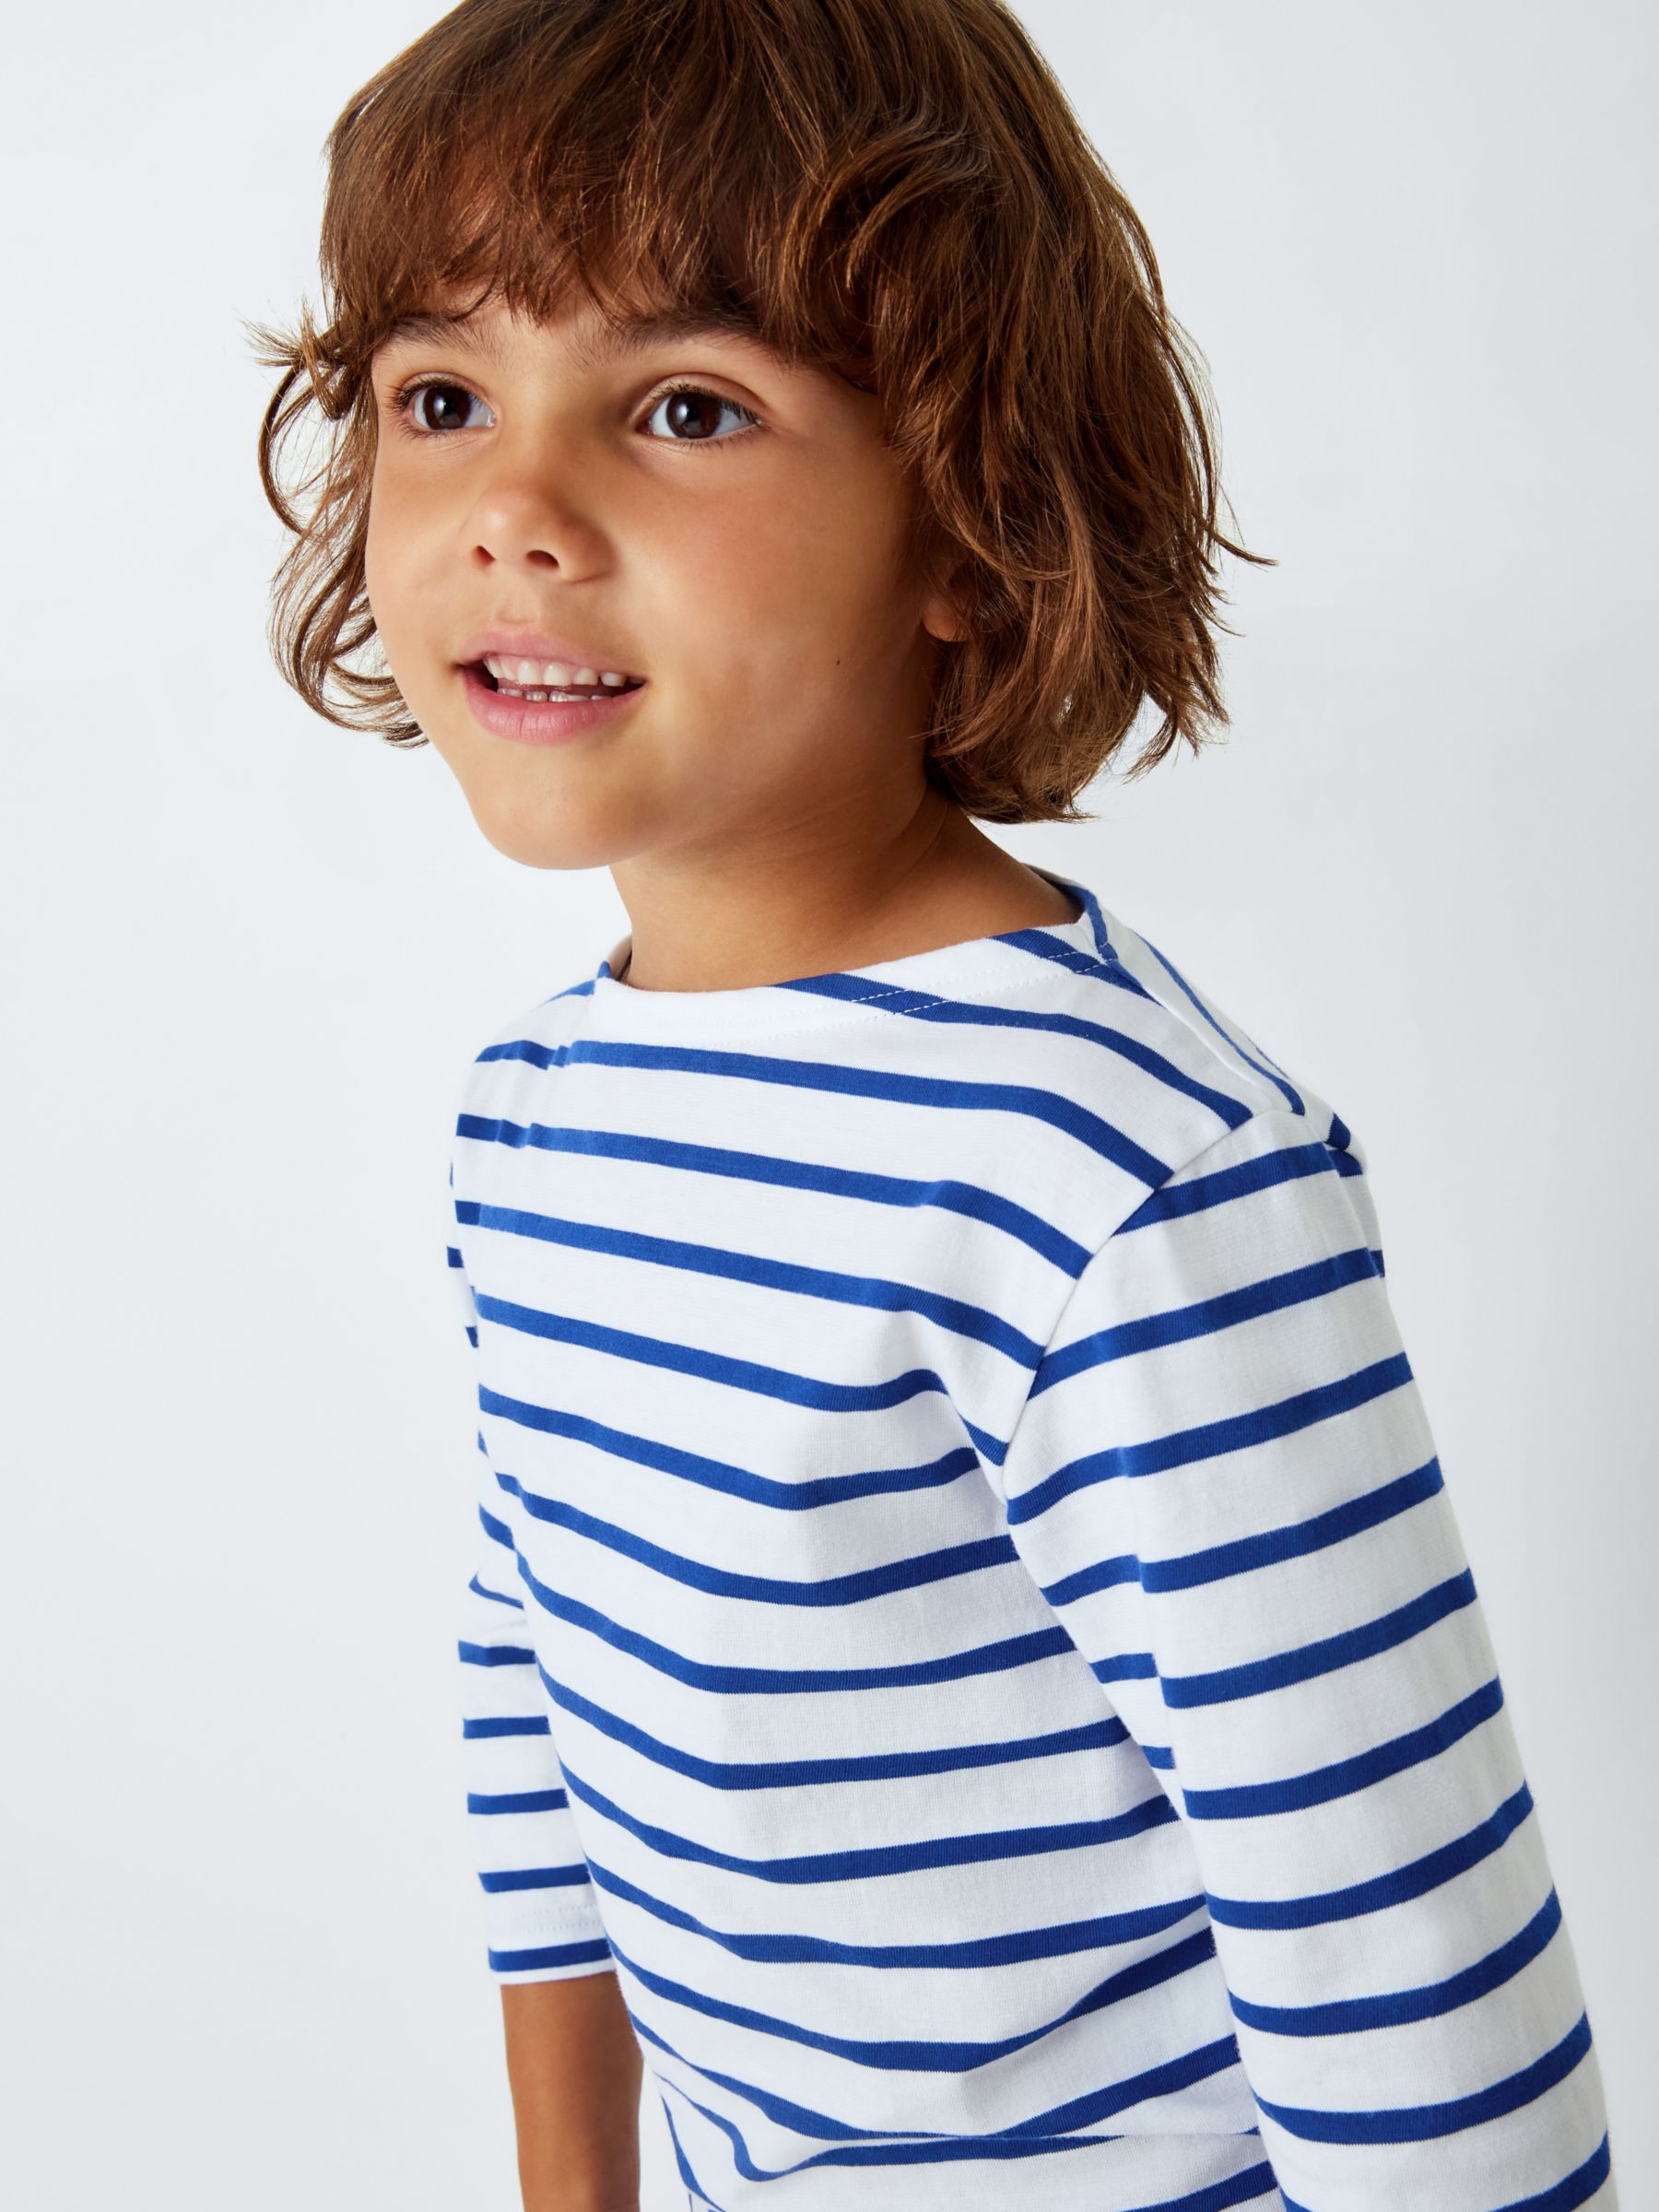 Armor Lux Kids' Long Sleeve 3/4 Stripe Top, Blue/White, 8 years